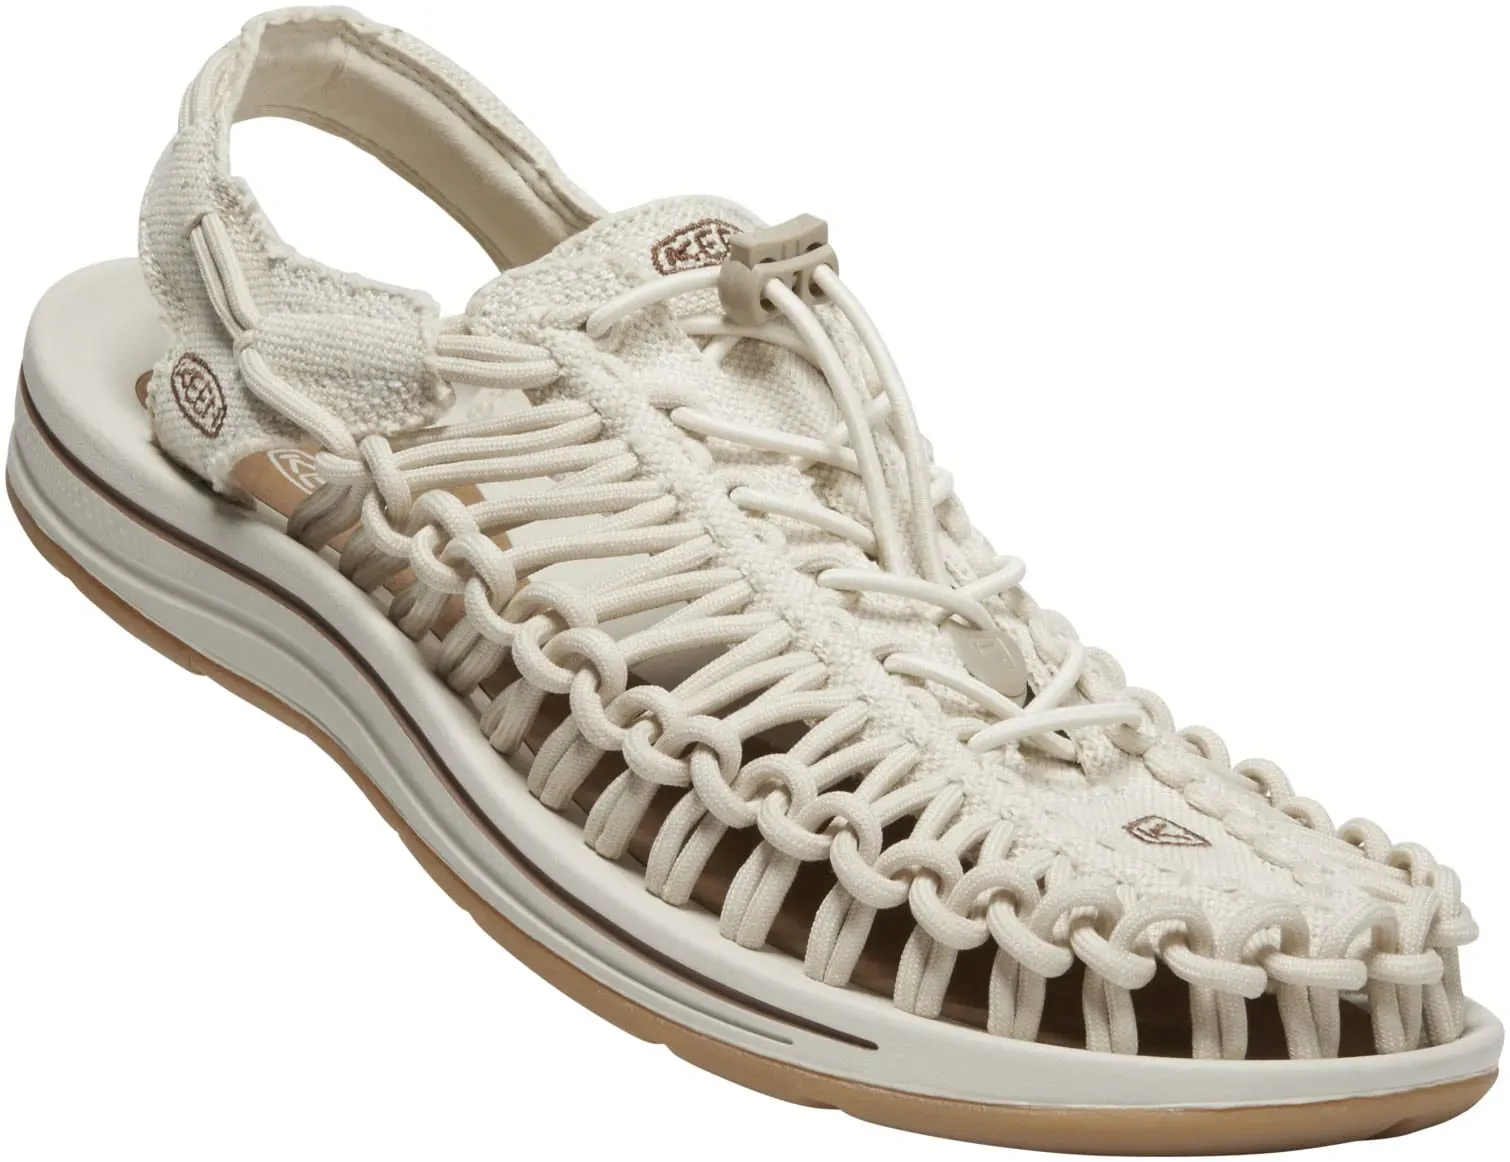 Sandale KEEN "UNEEK CANVAS" Gr. 43, natural canvas, birch Schuhe Stoffschuhe Sneaker Sandale